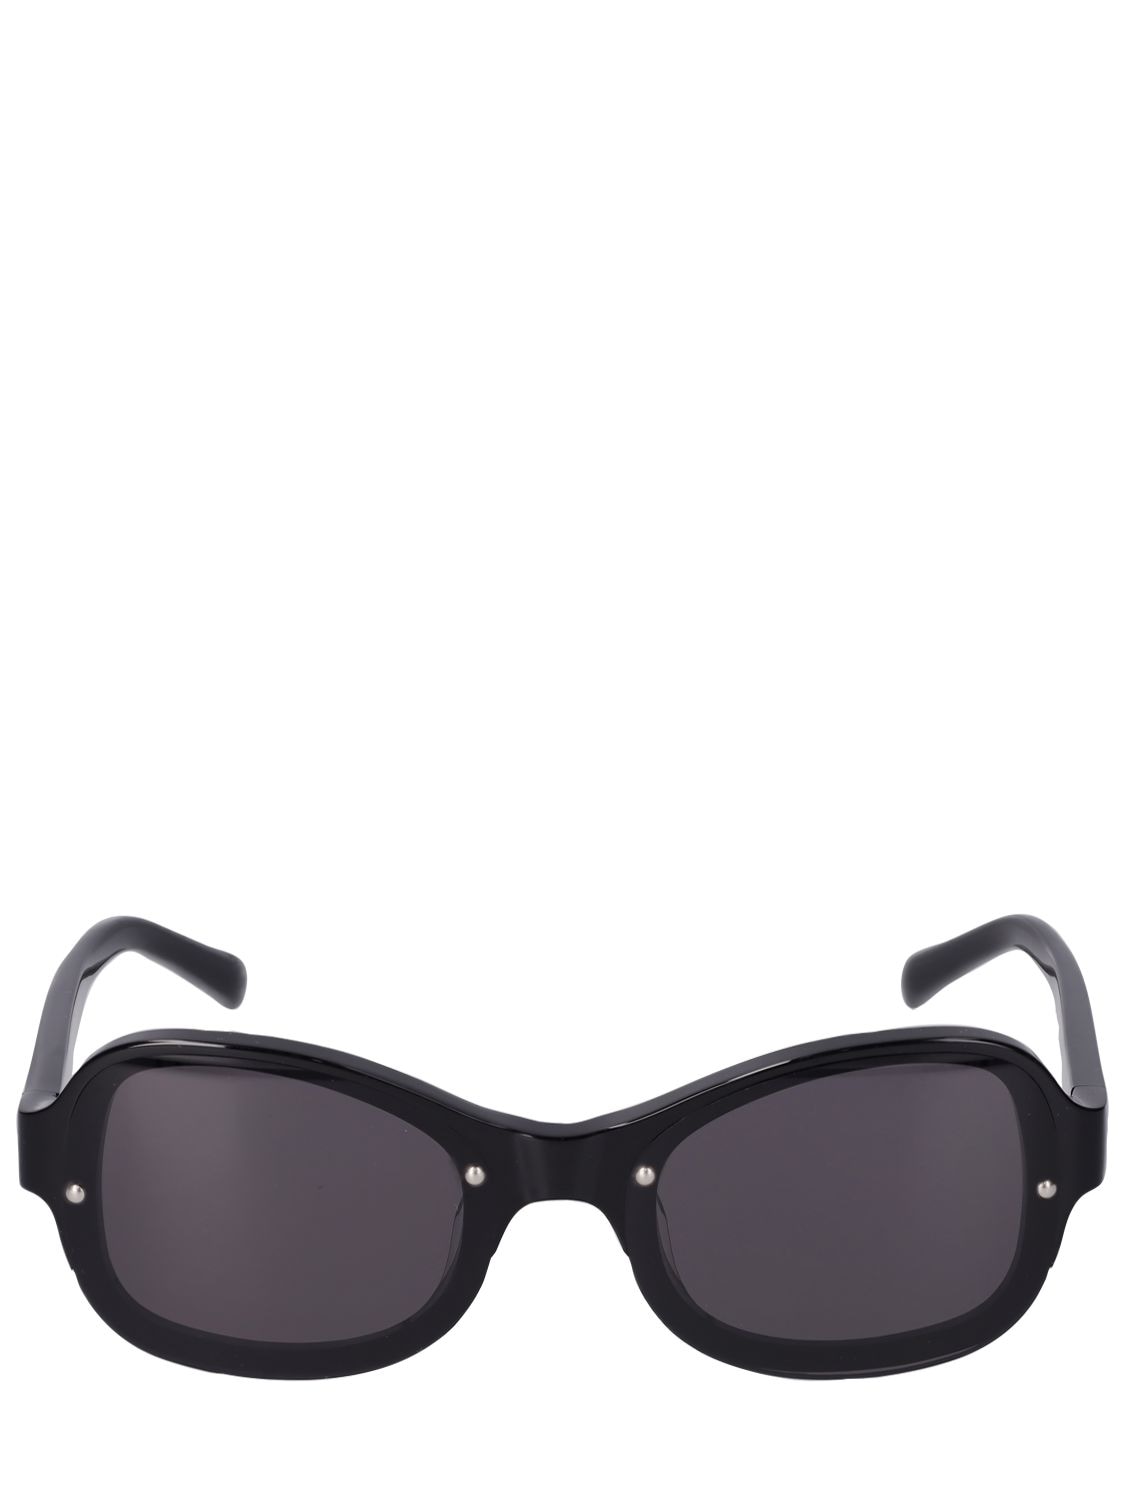 Image of Iris Black Sunglasses